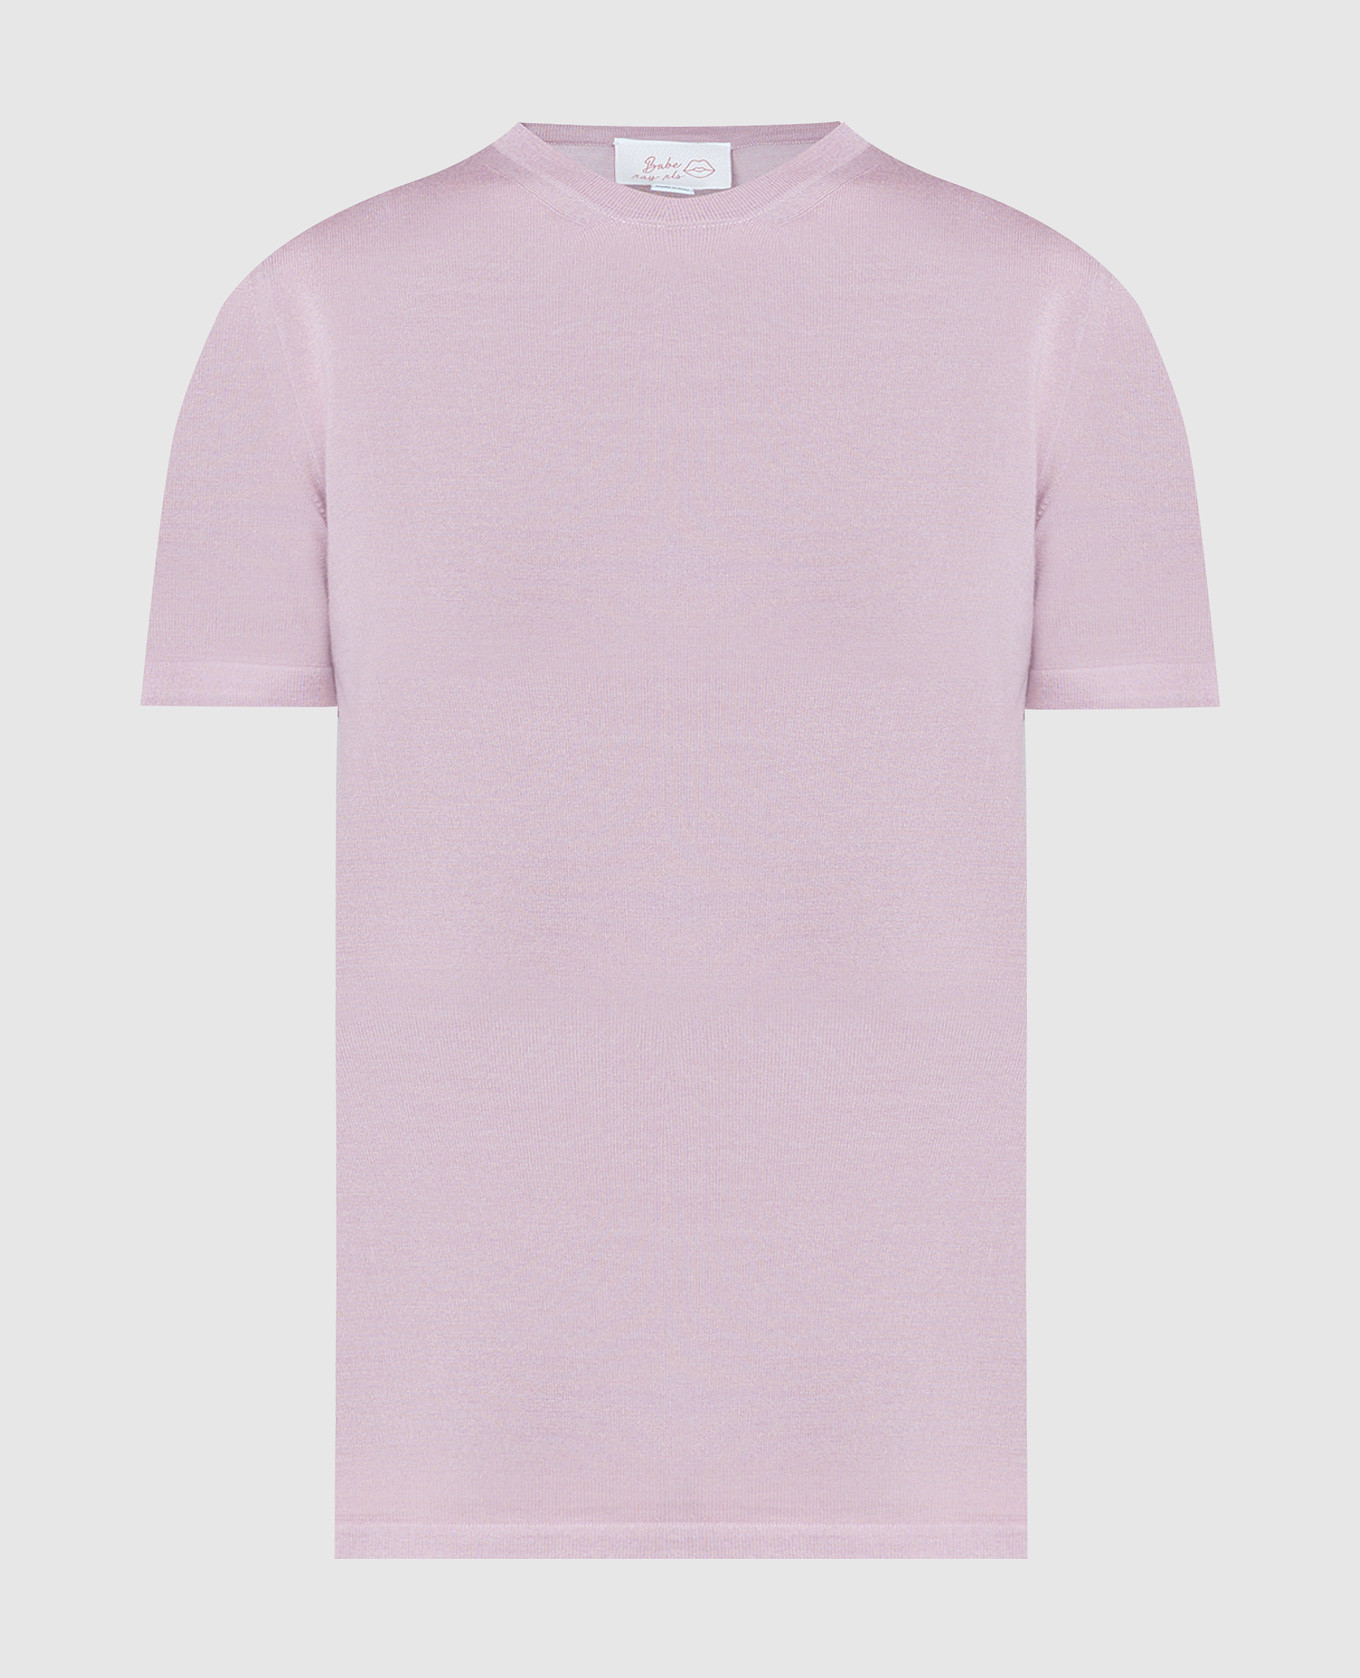 Розовая футболка из шерсти, шелка и кашемира.